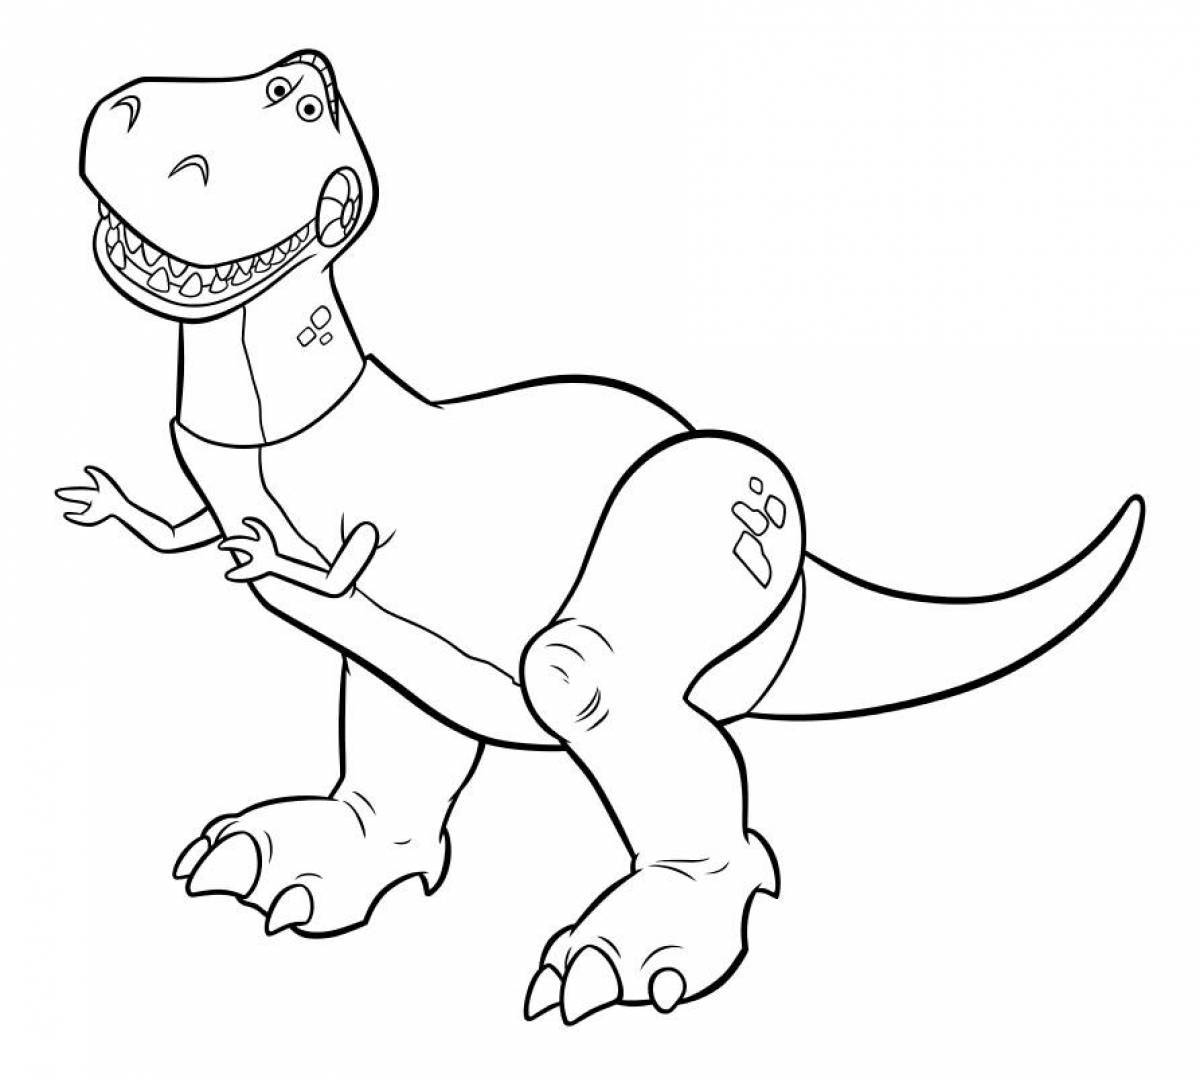 Adorable Turbosaurus coloring page